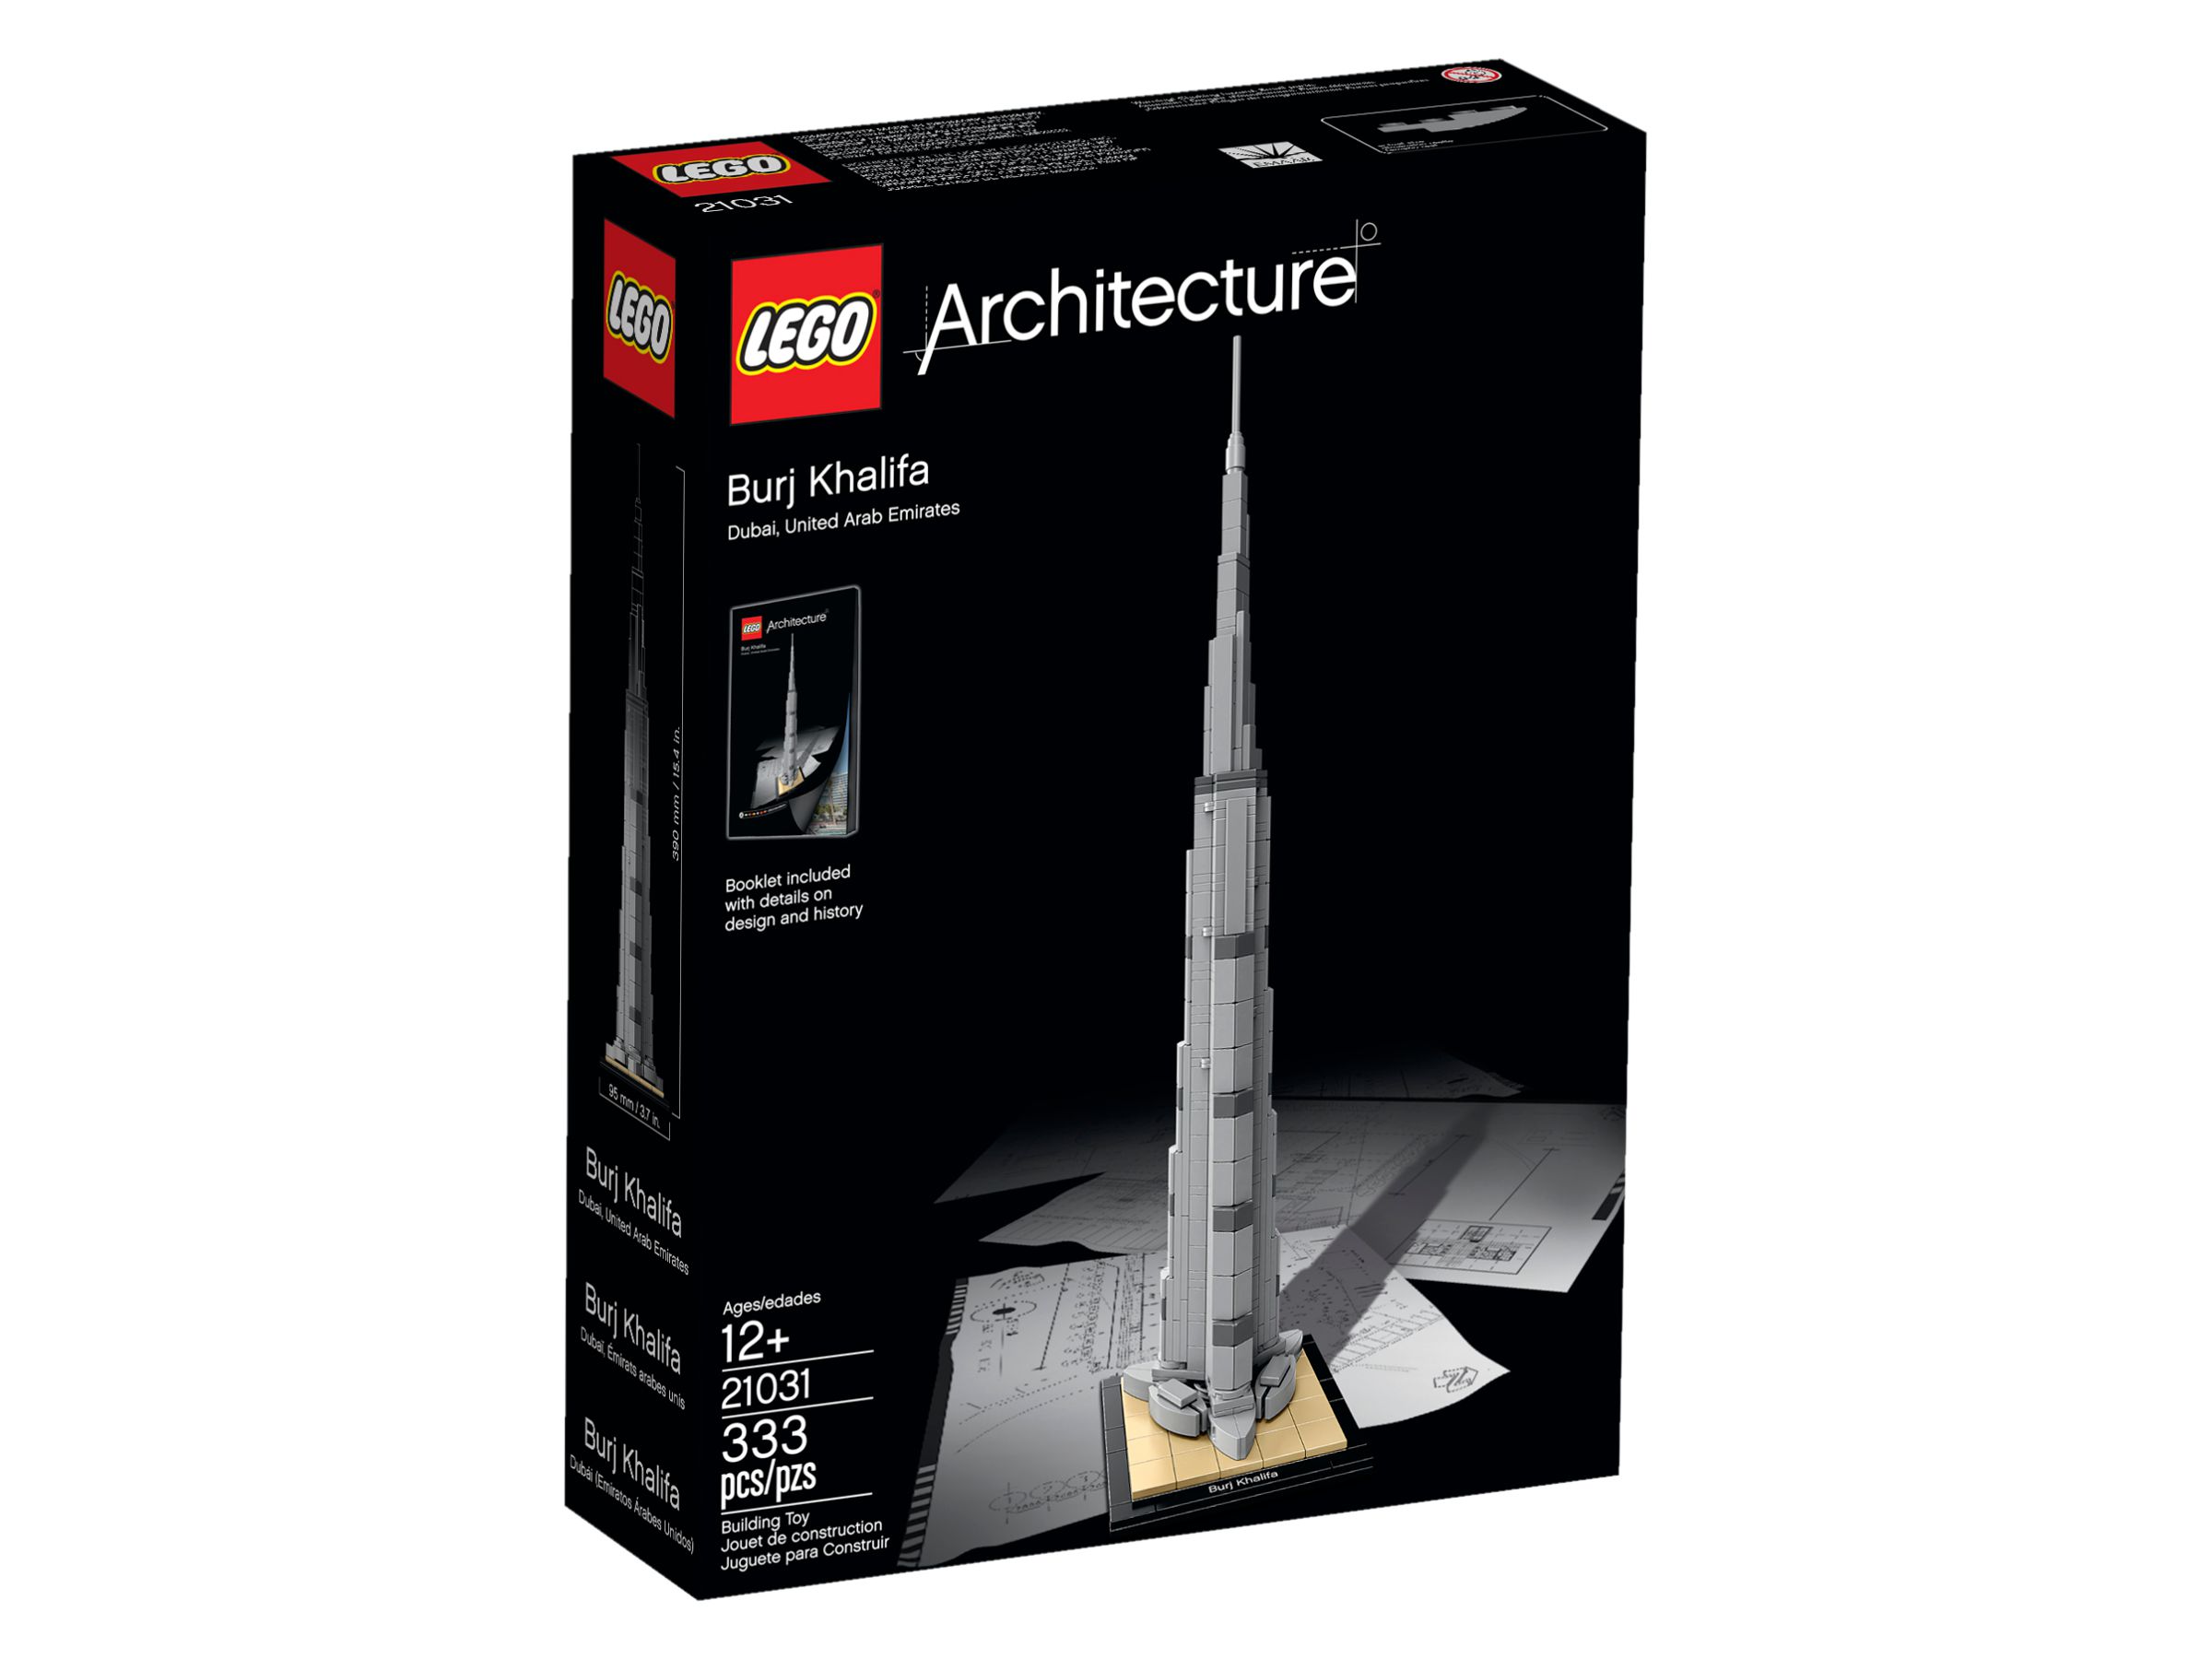 LEGO Architecture 21031 Burj Khalifa LEGO_21031_alt1.jpg